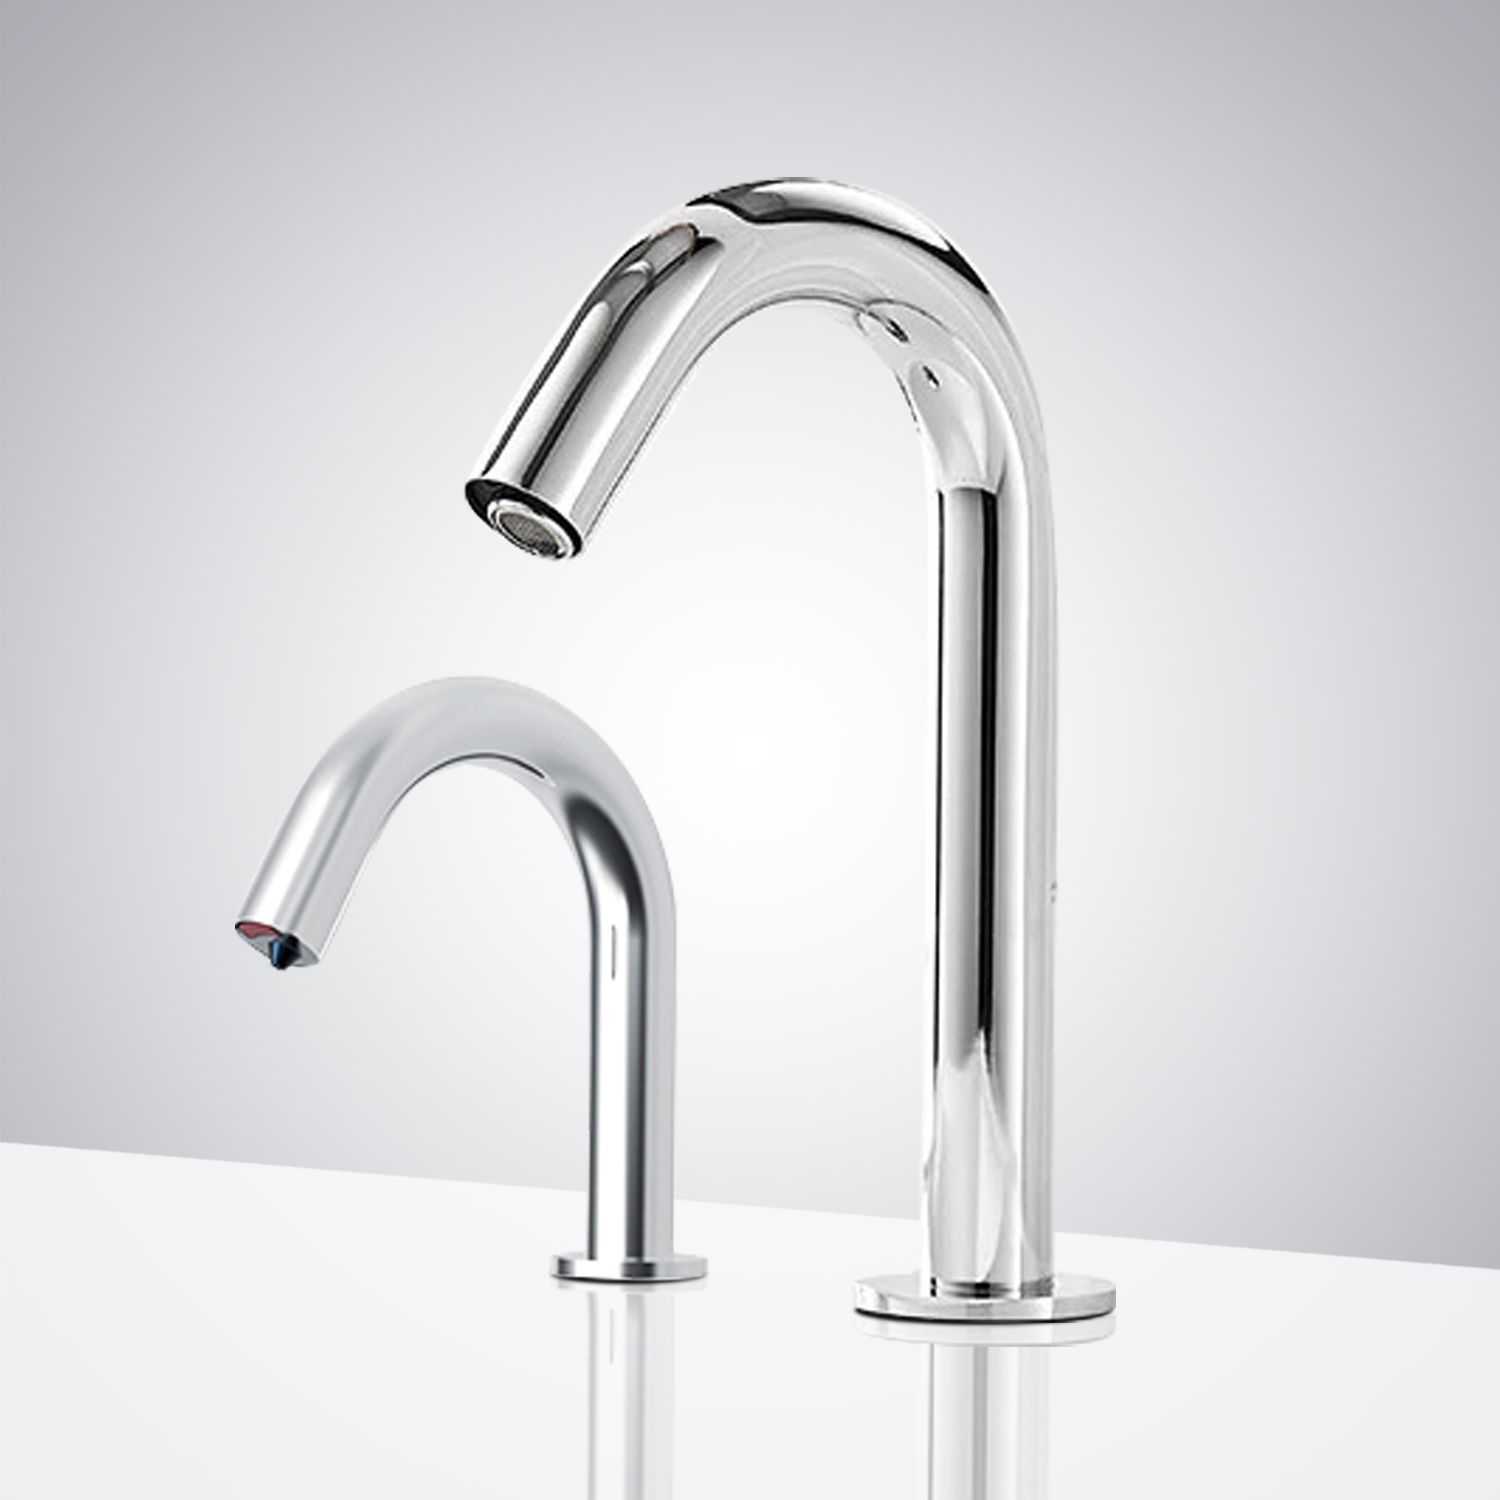 DUPLICATE Fontana St. Gallen Chrome Finish Motion Sensor Faucet & Automatic Soap Dispenser for Restrooms